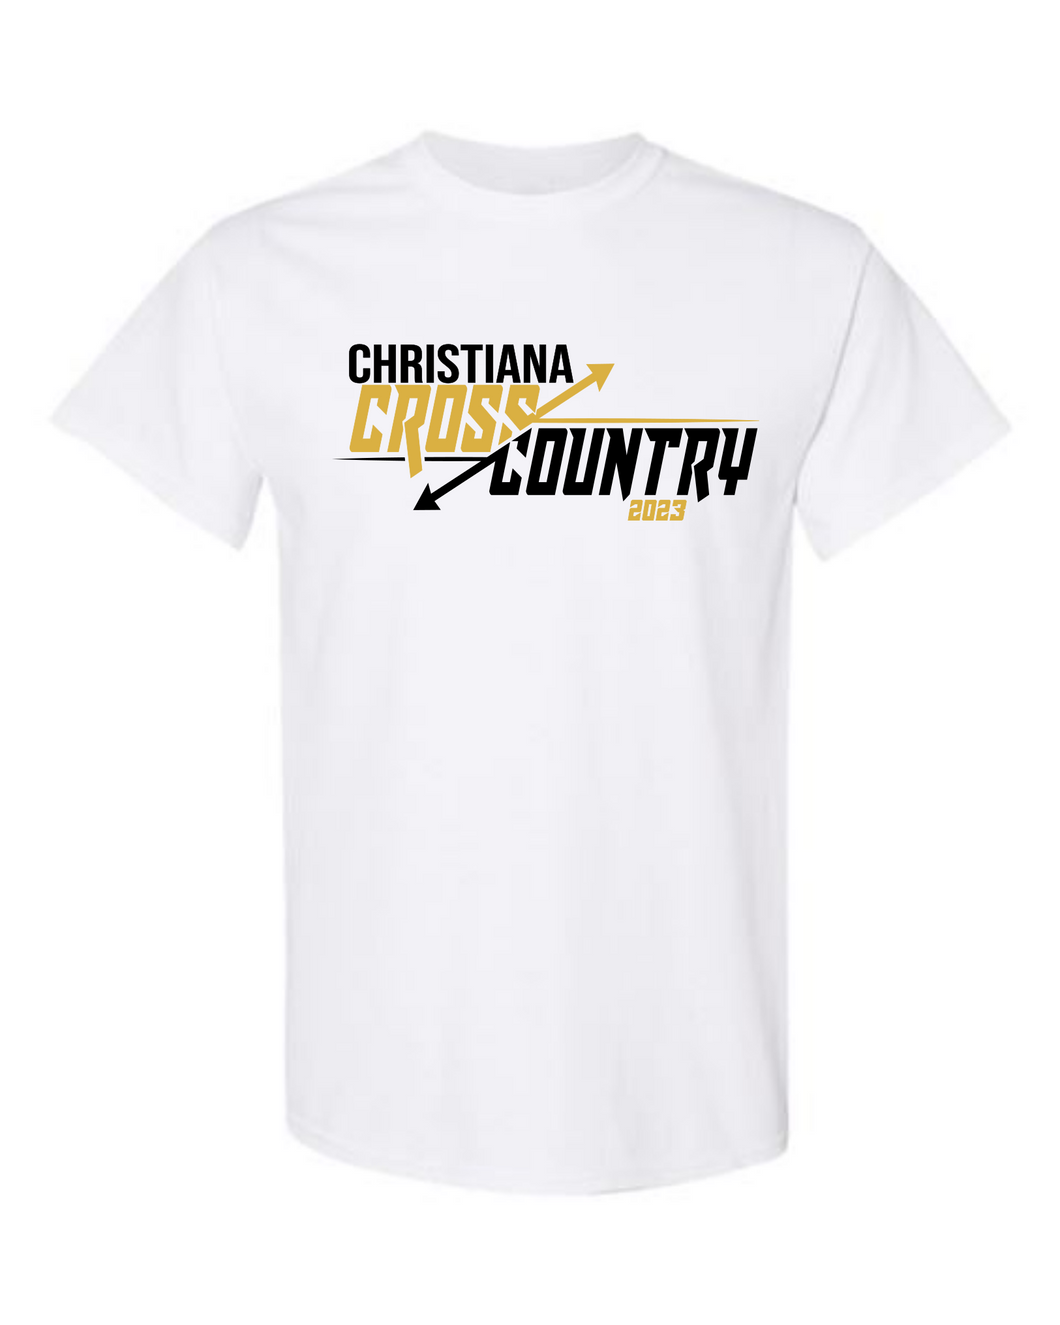 Christiana Cross Country Arrow Tshirt